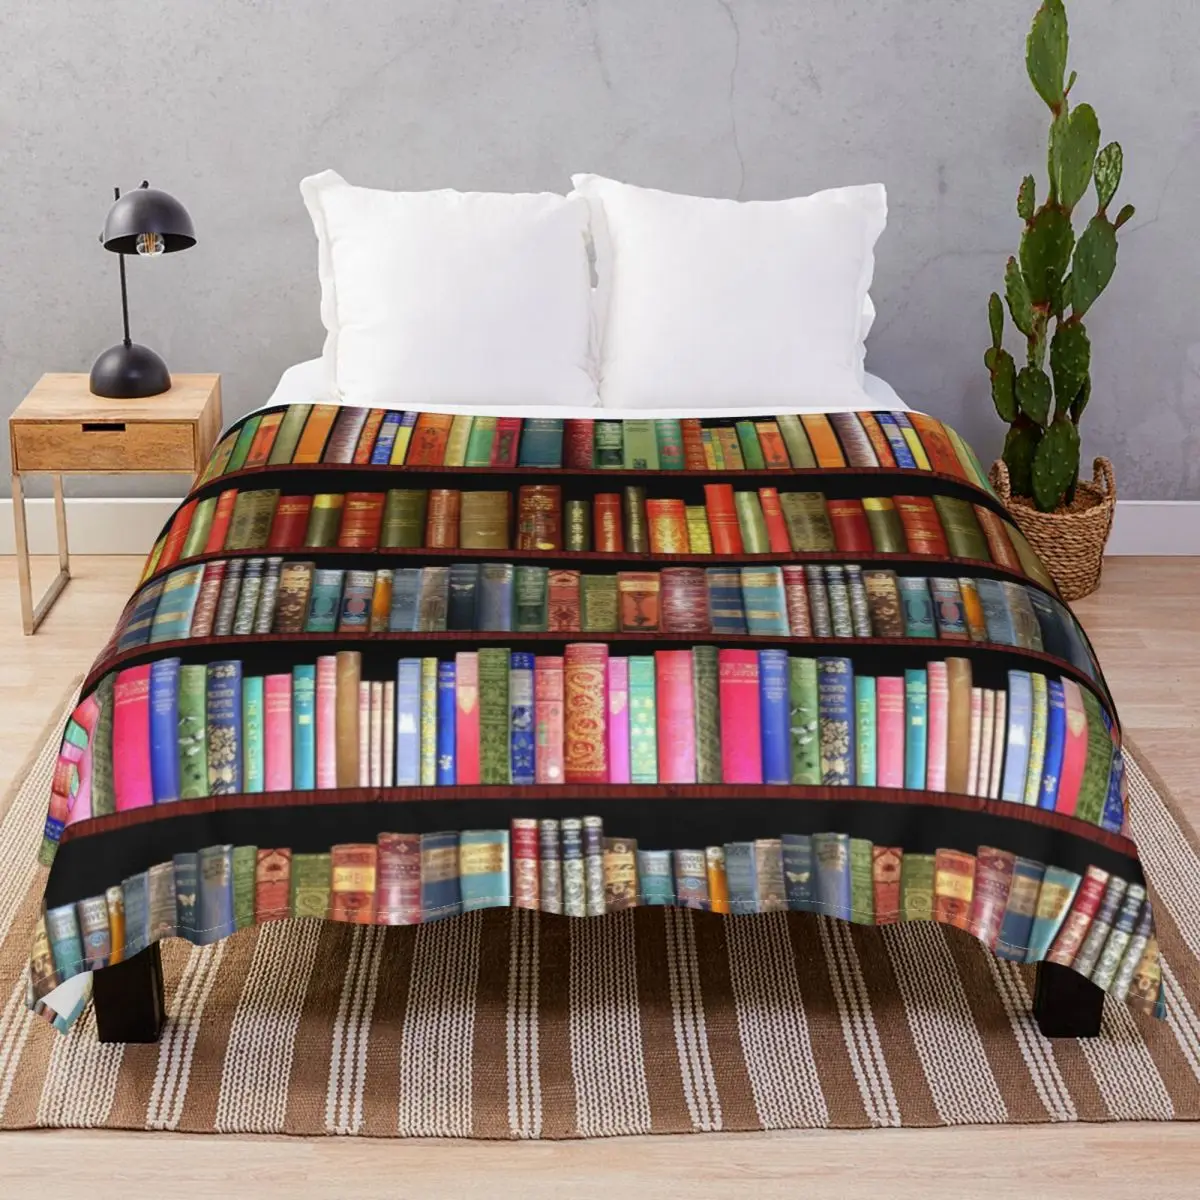 Jane Austen Antique Books Blankets Fleece Autumn Multifunction Throw Blanket for Bed Sofa Travel Cinema